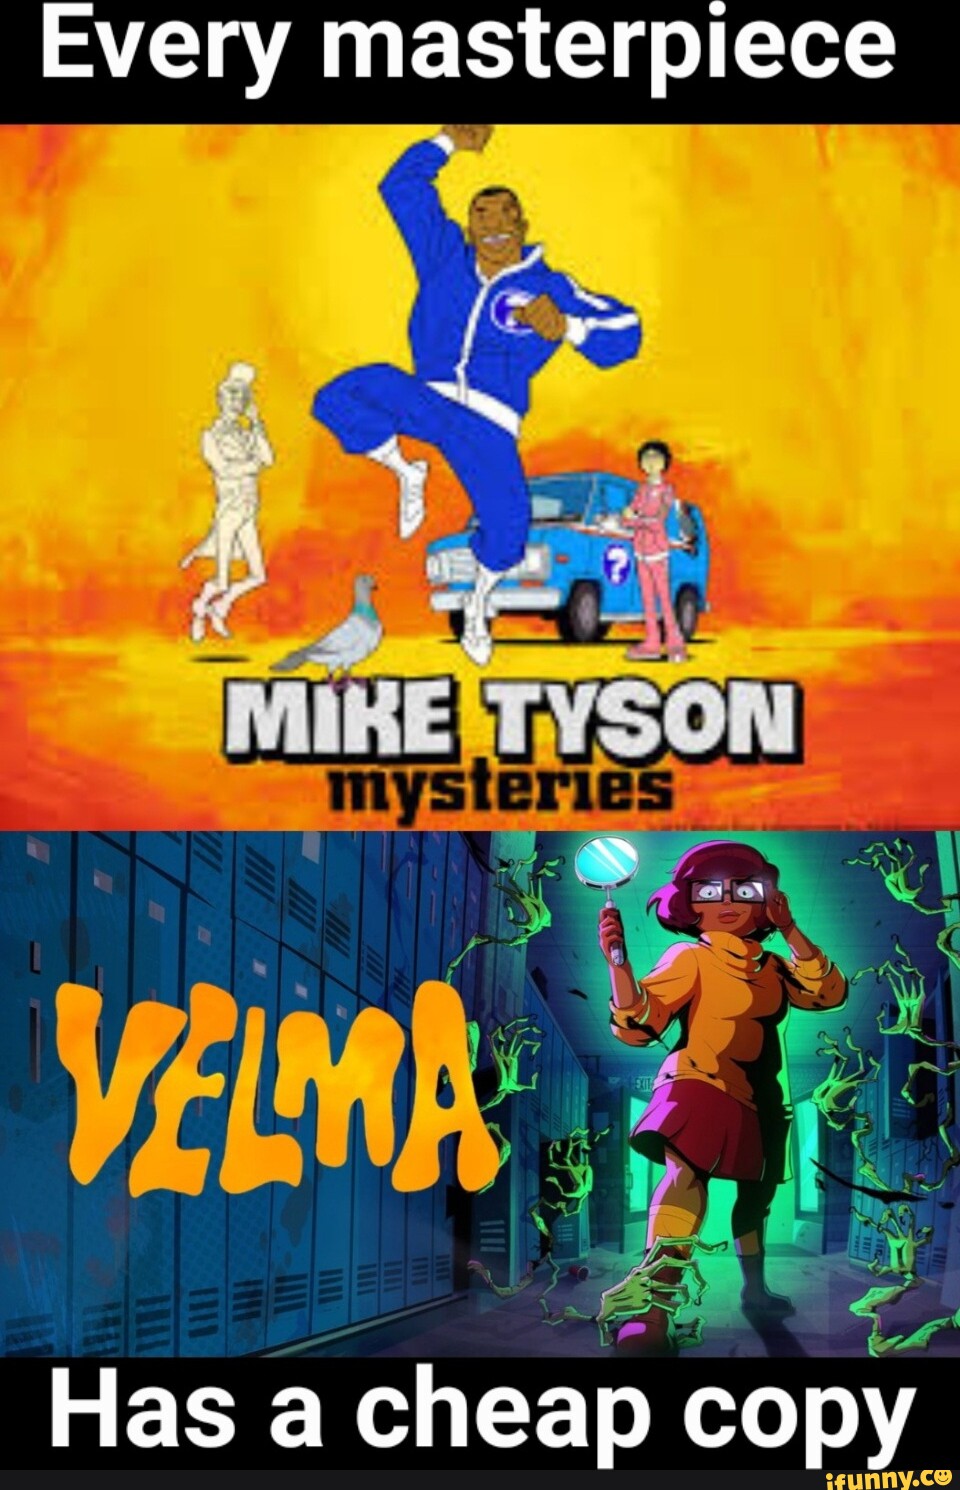 Velma is a Masterpiece 